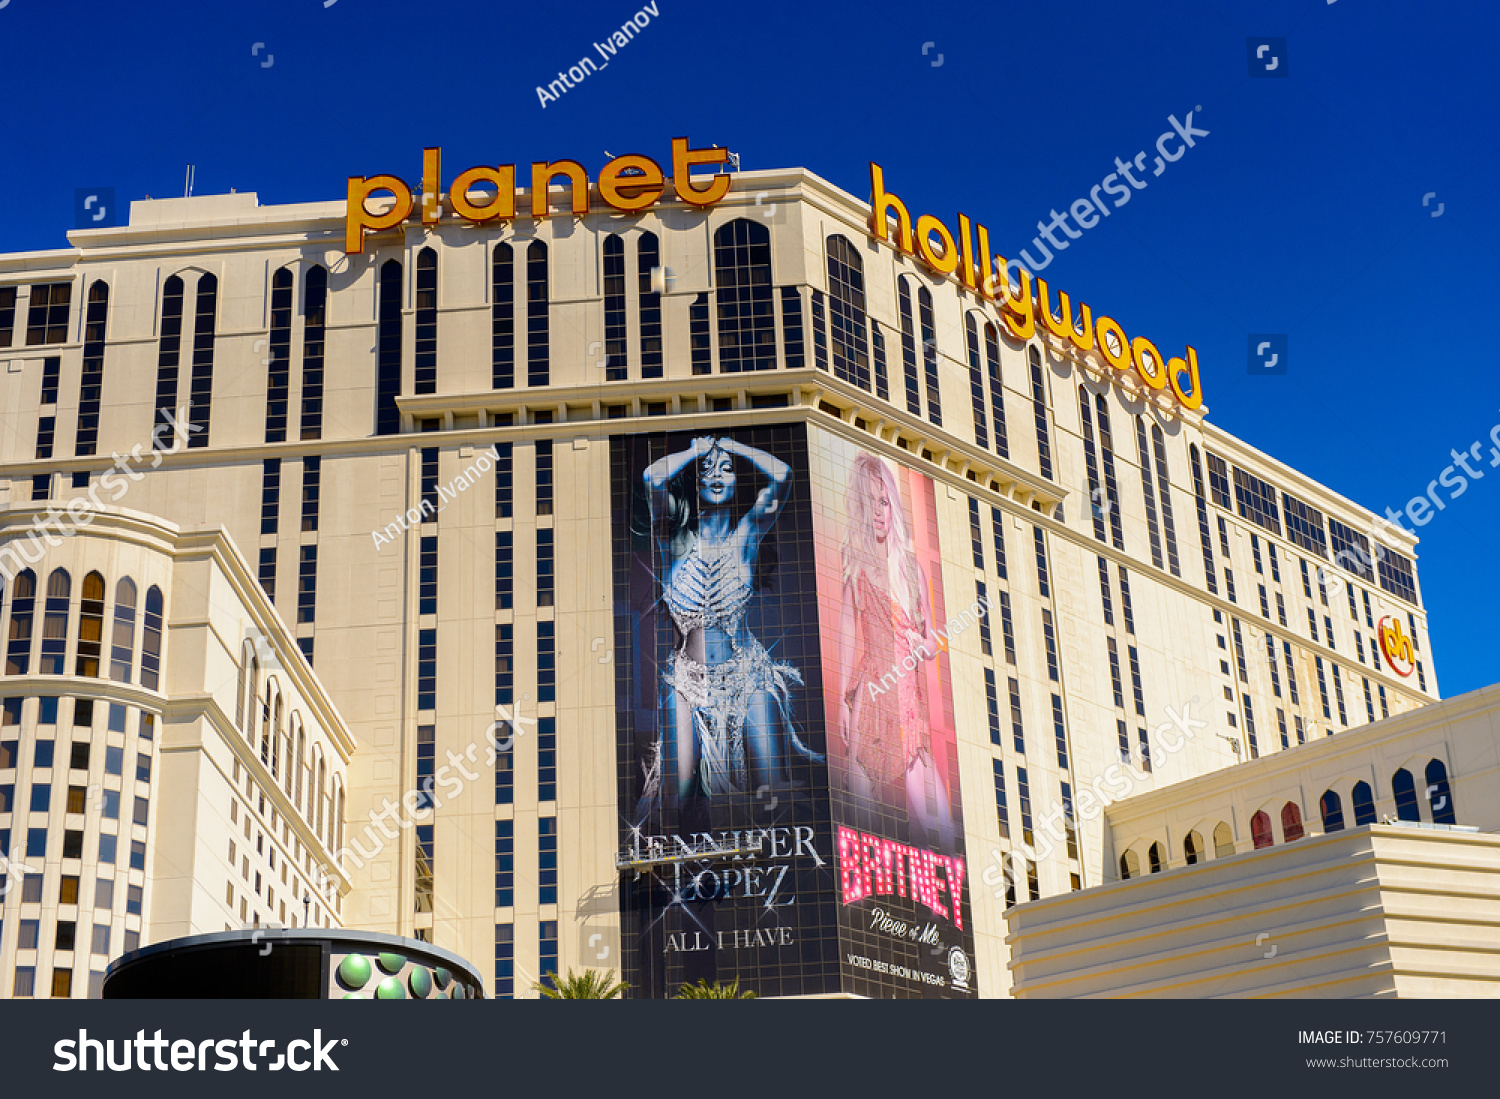 BRITNEY SPEARS JENNIFER LOPEZ Photo Card Lot Planet Hollywood Casino Las Vegas 